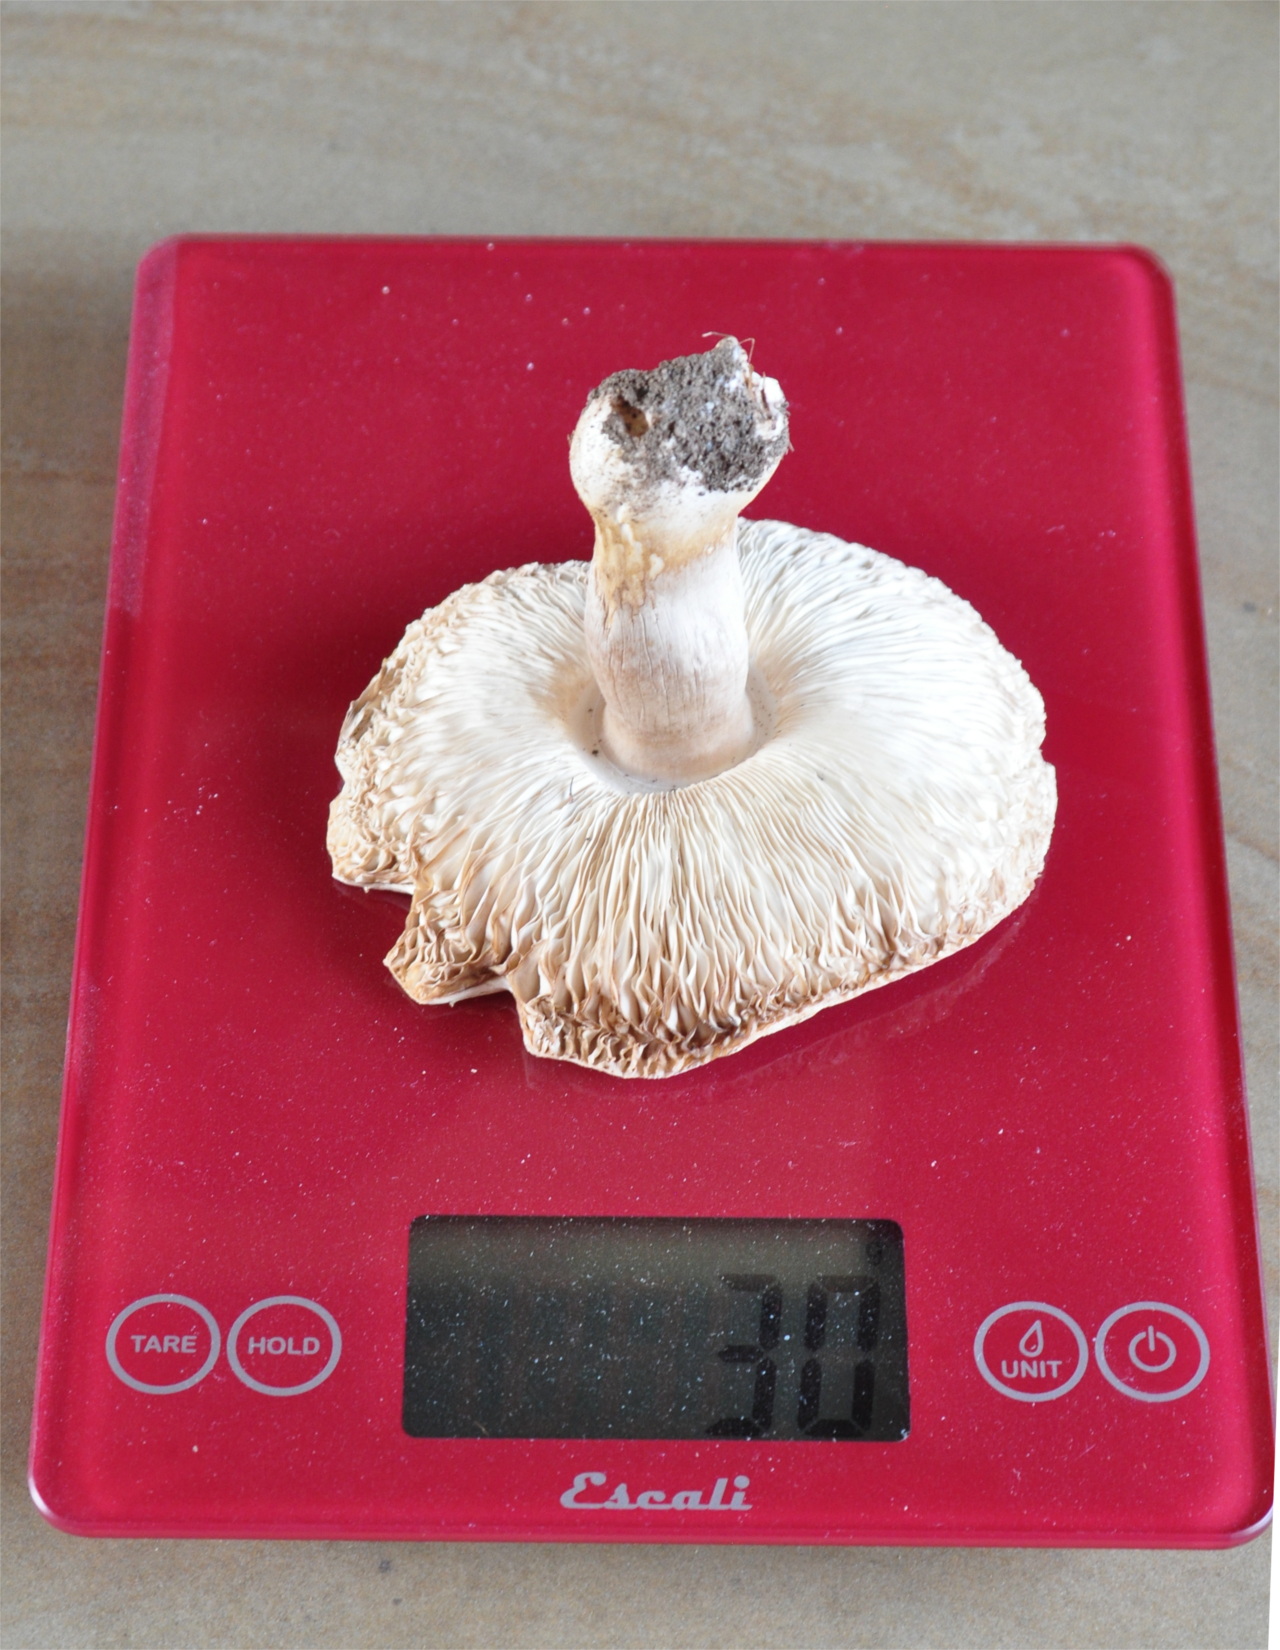 Weighing a Mushroom